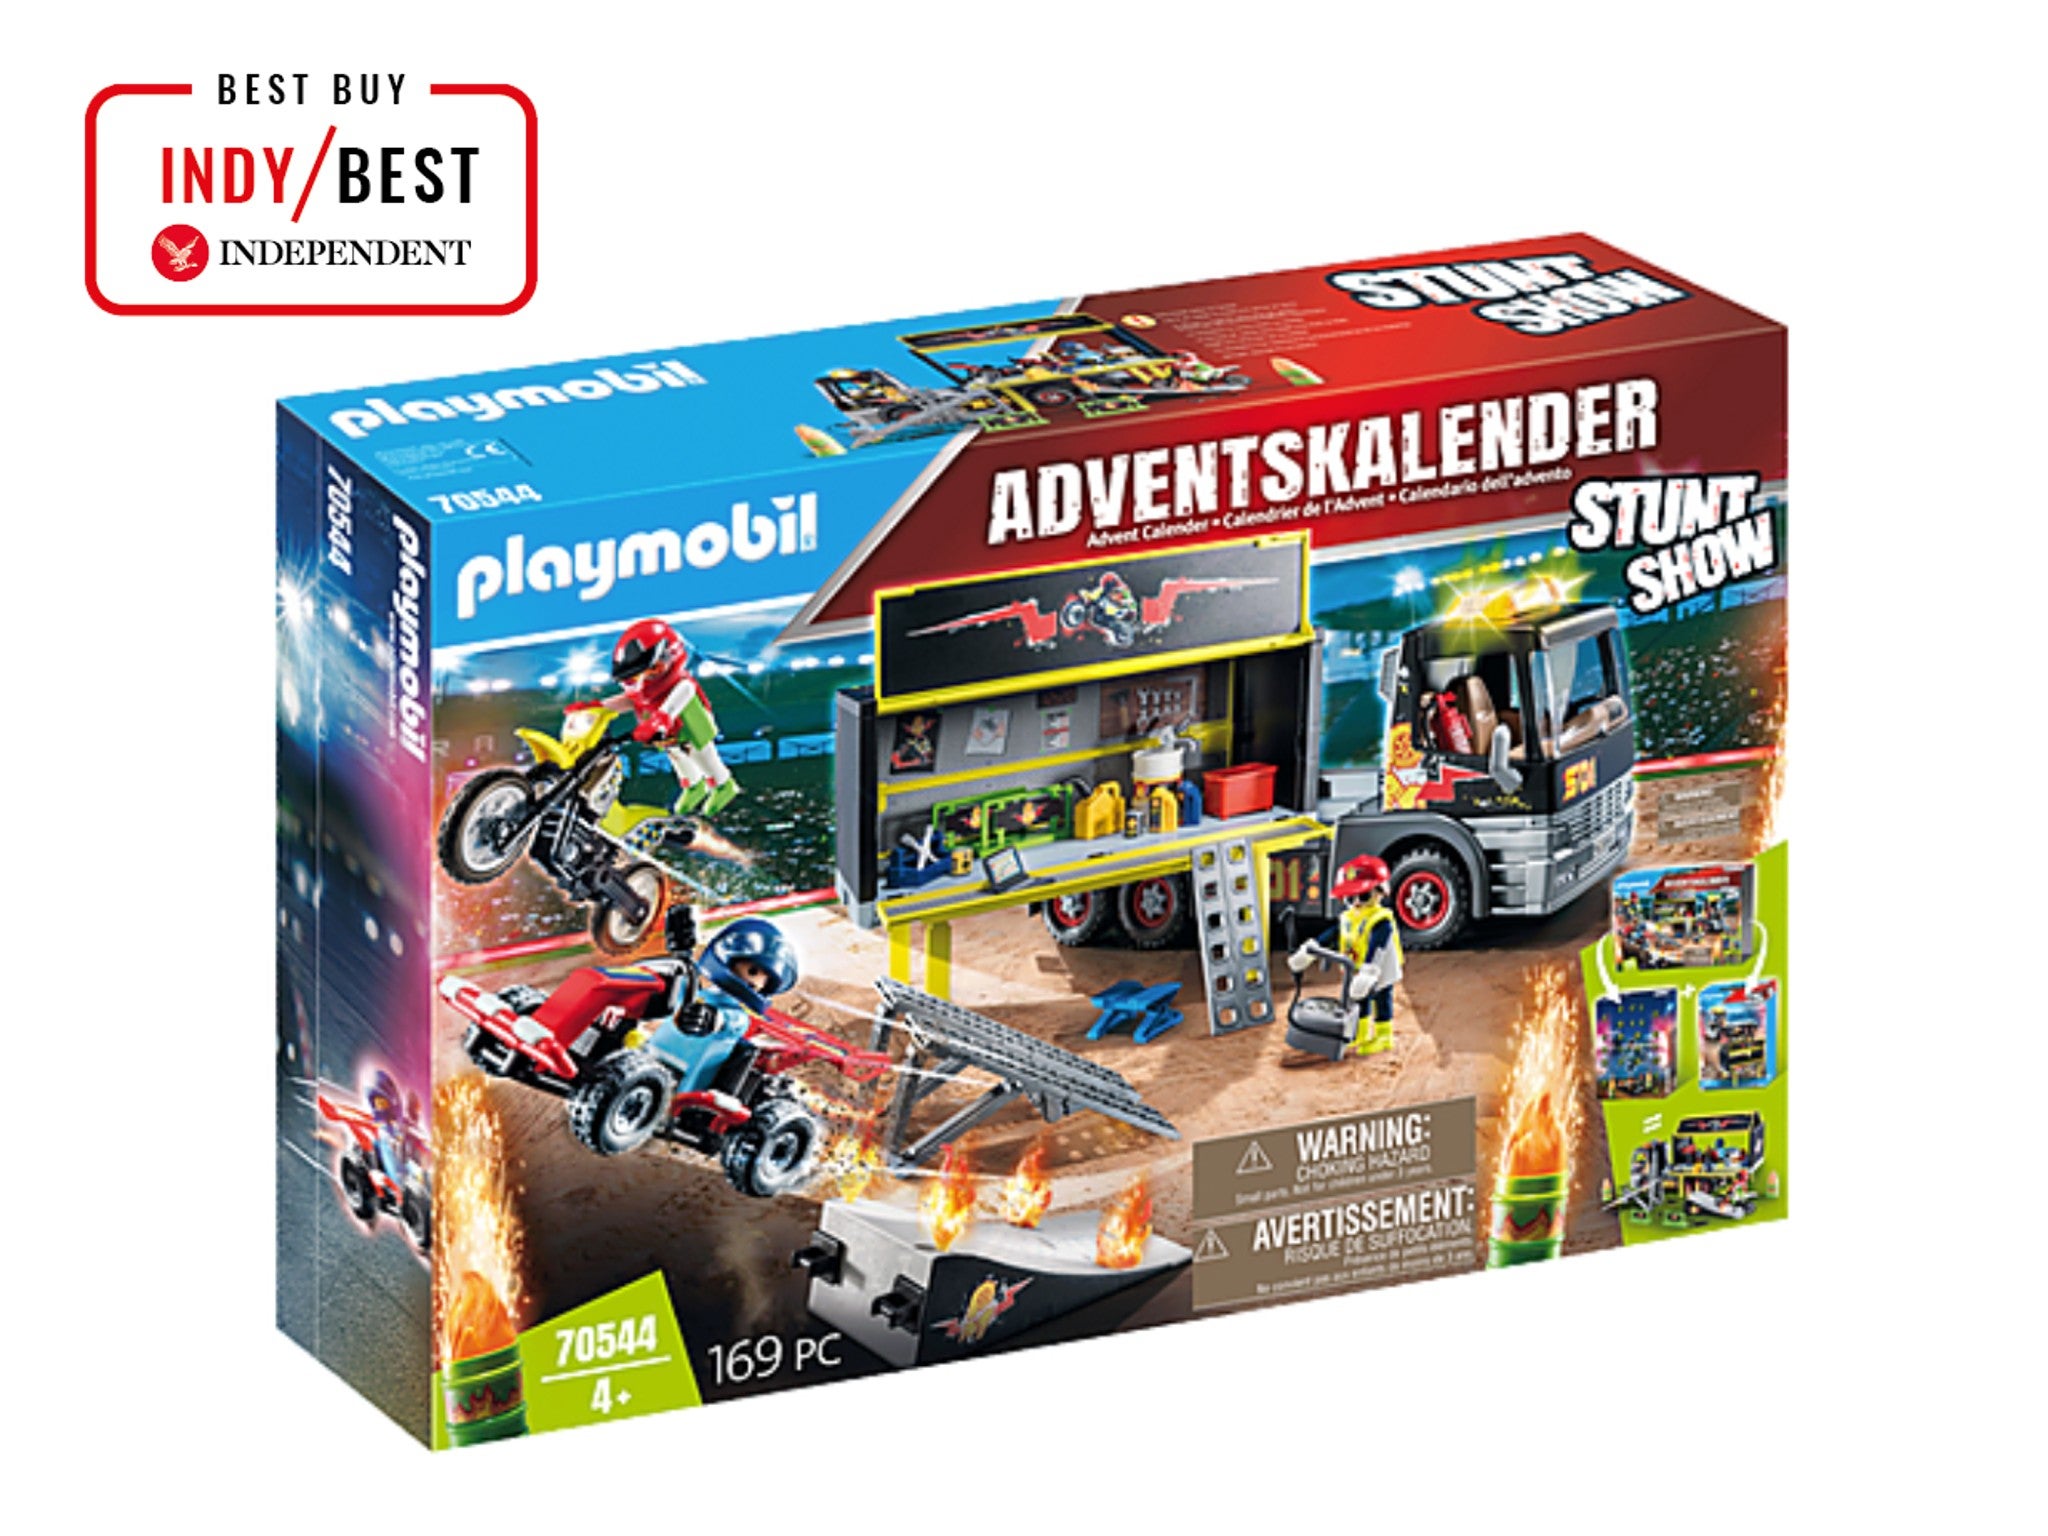 Playmobil jumbo advent calendar – stunt show indybest.jpeg